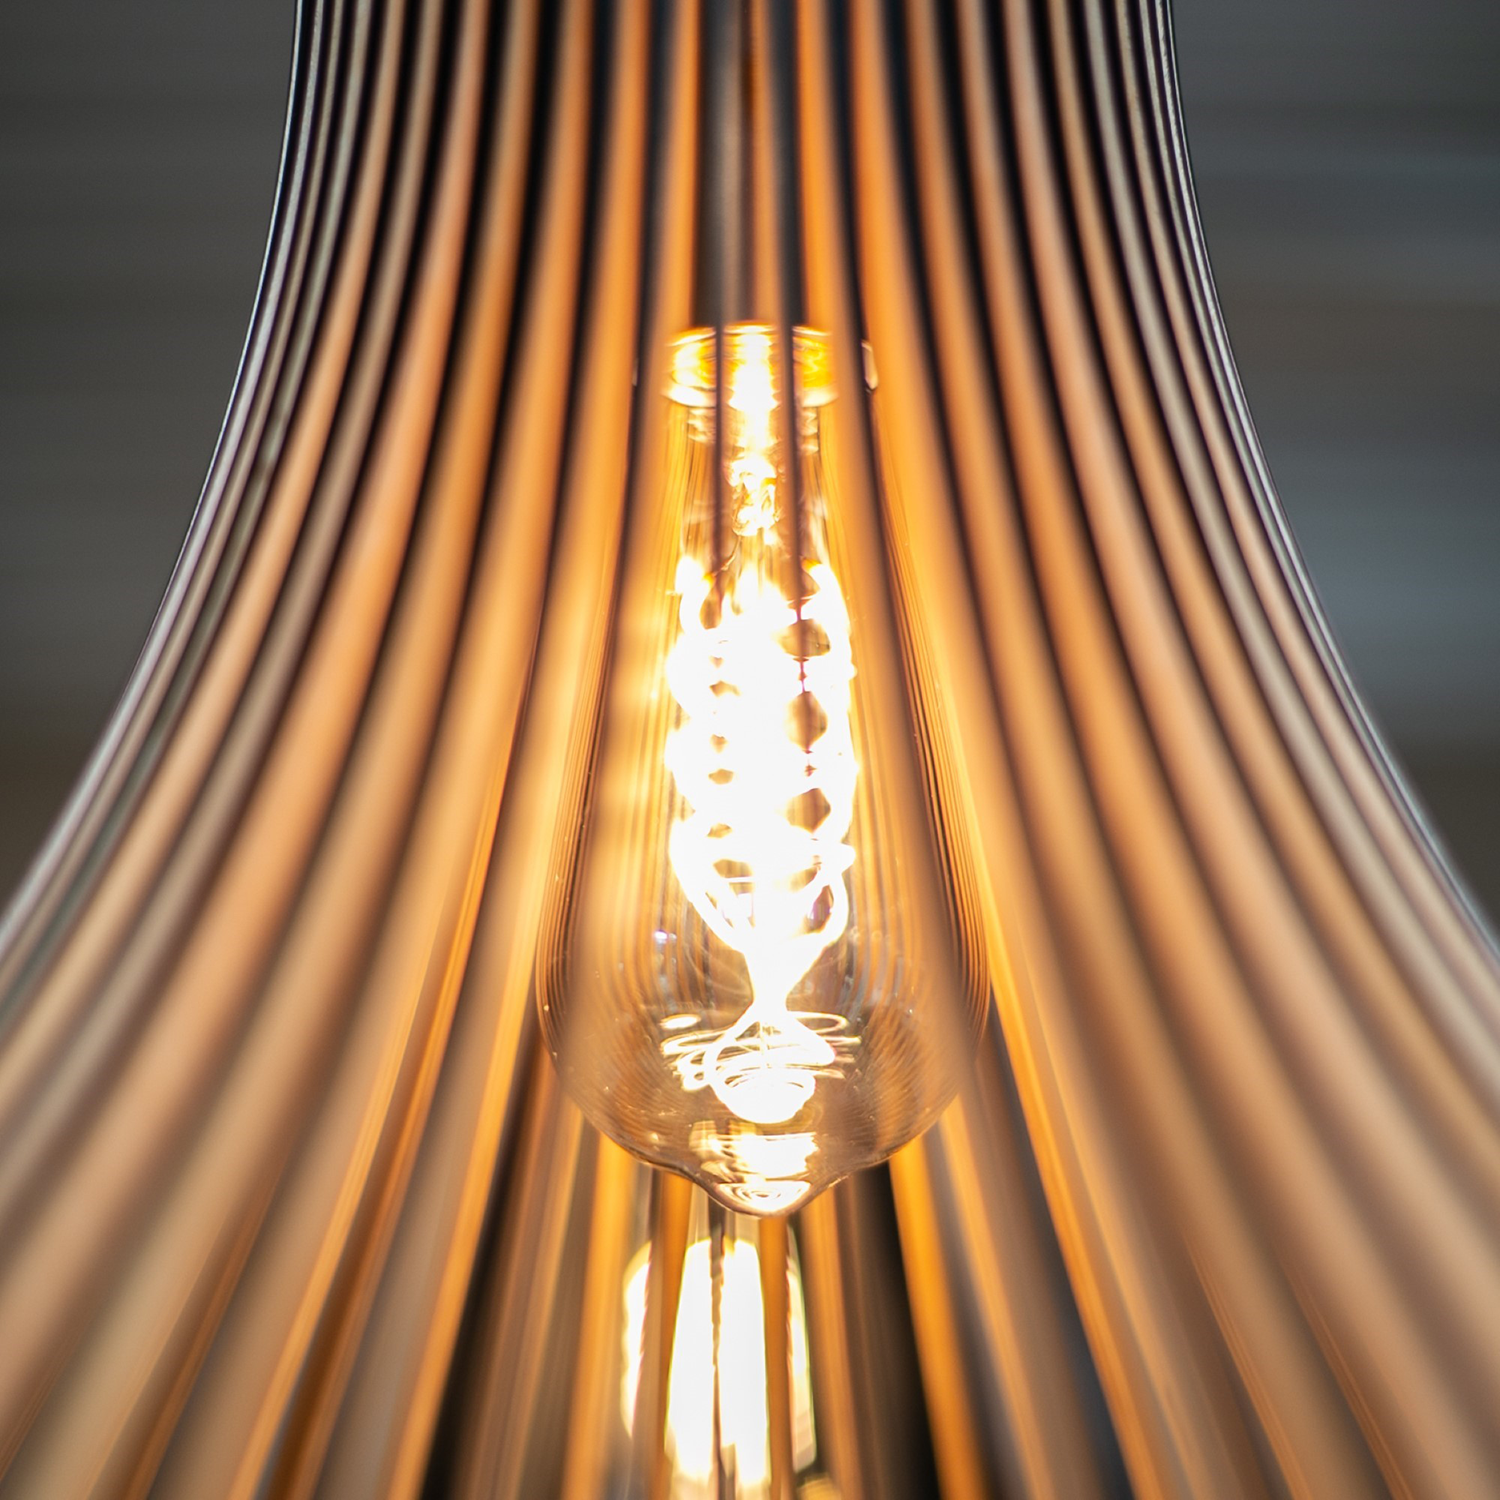 Edison Spiral LED filament - E27